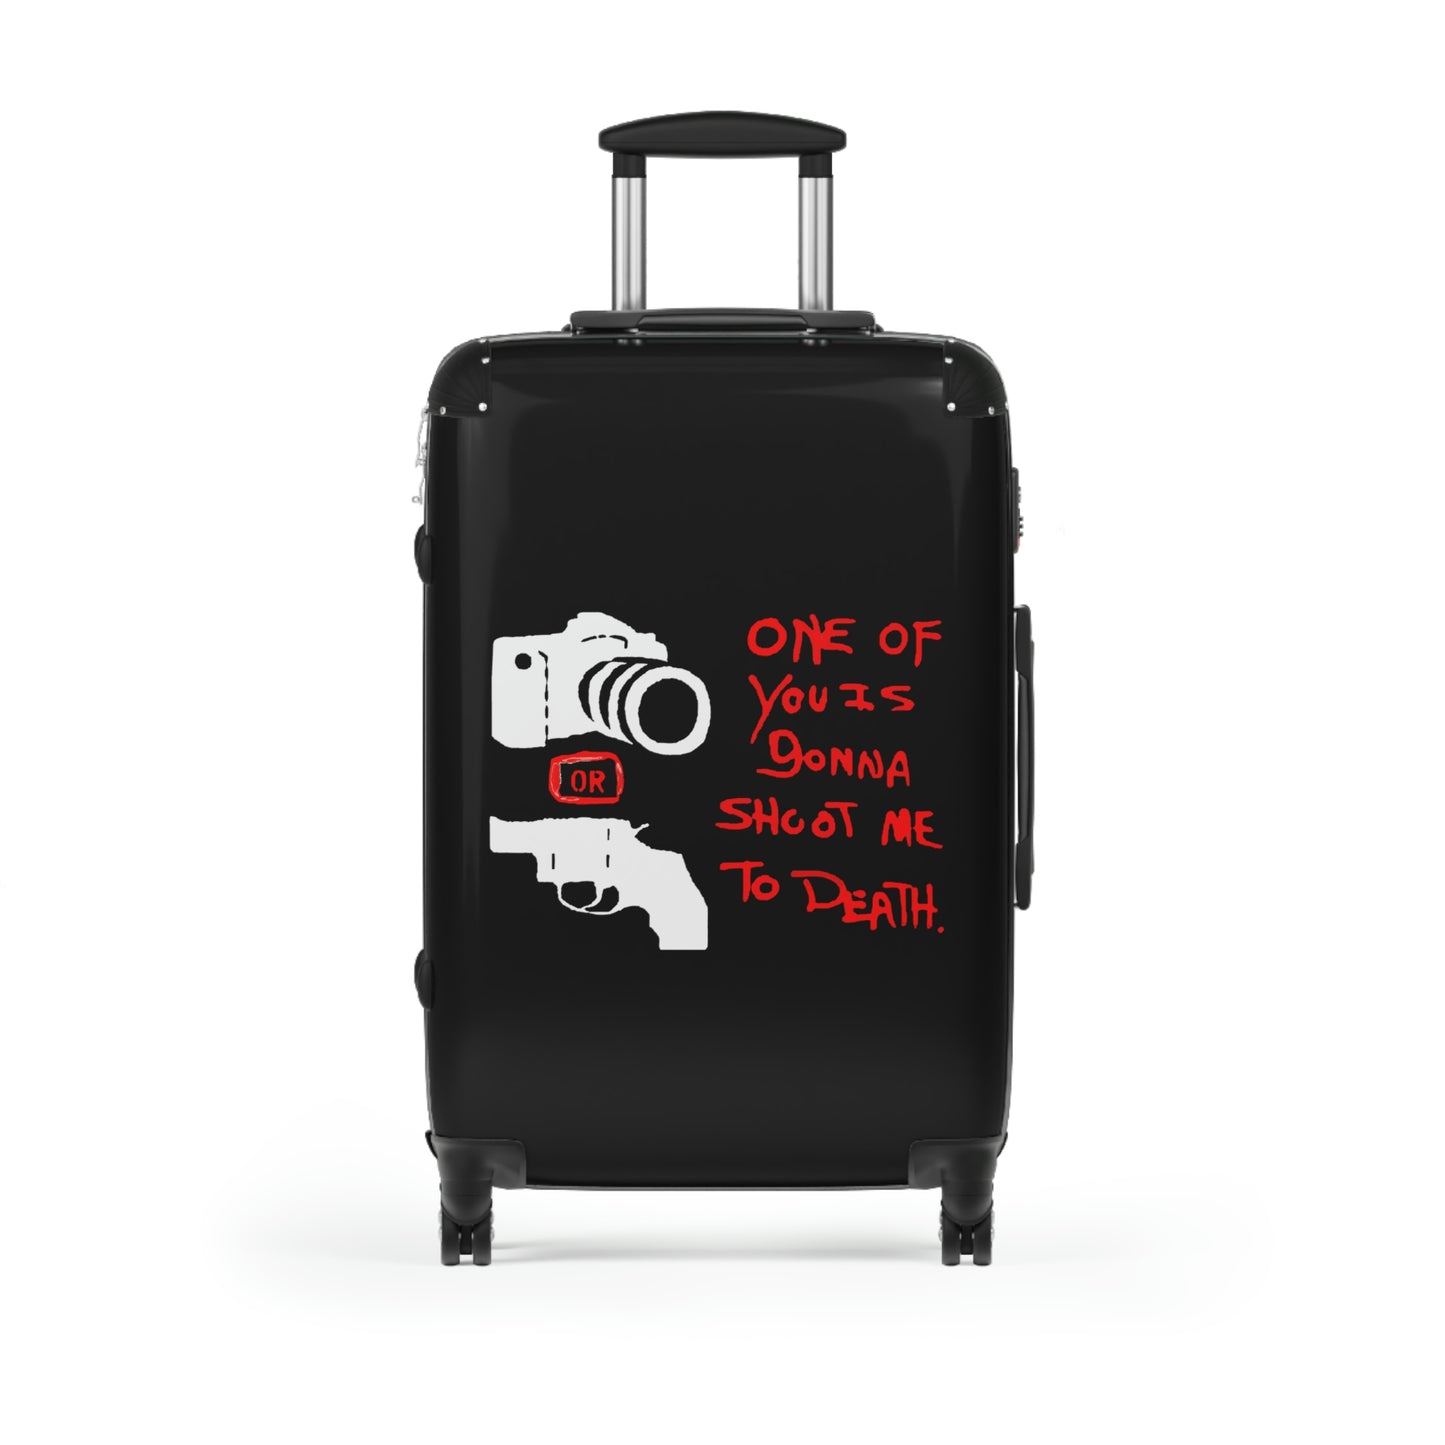 The Celebrity, Travel Unique Suitcase